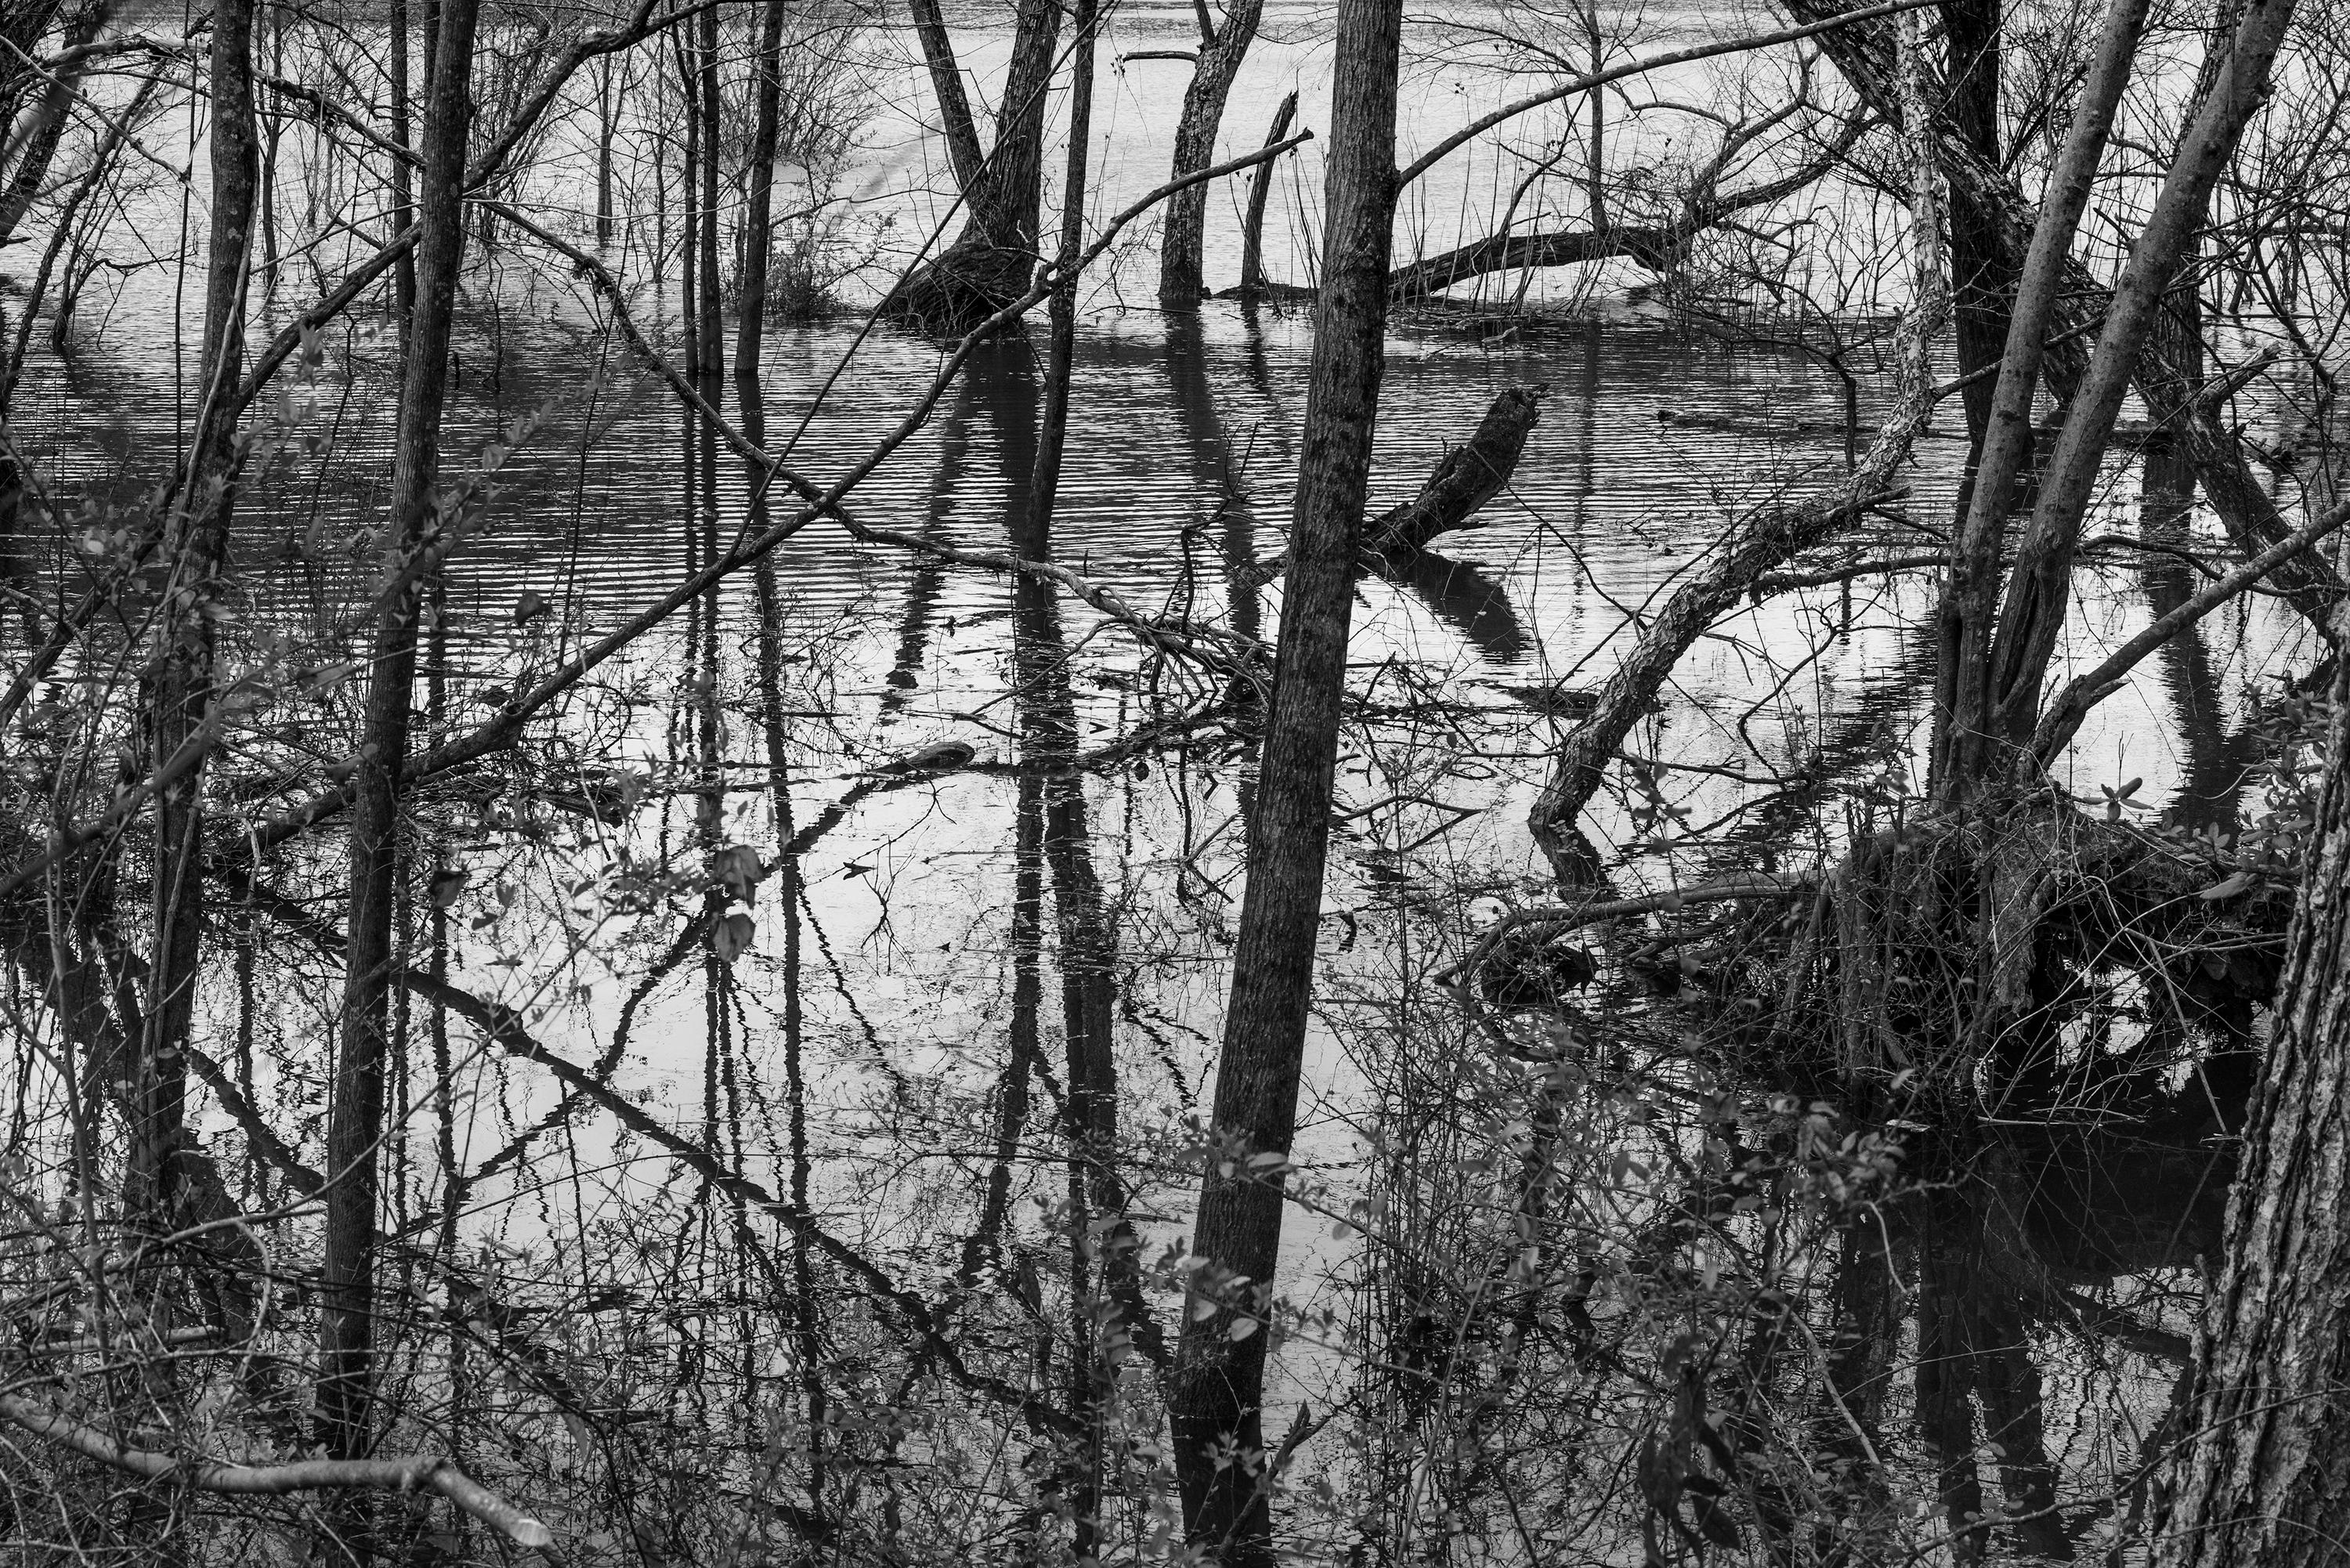 Black and White Photograph Richard Skoonberg - « Rising Water » - Noir et blanc - Photographie de paysage - Eliot Porter